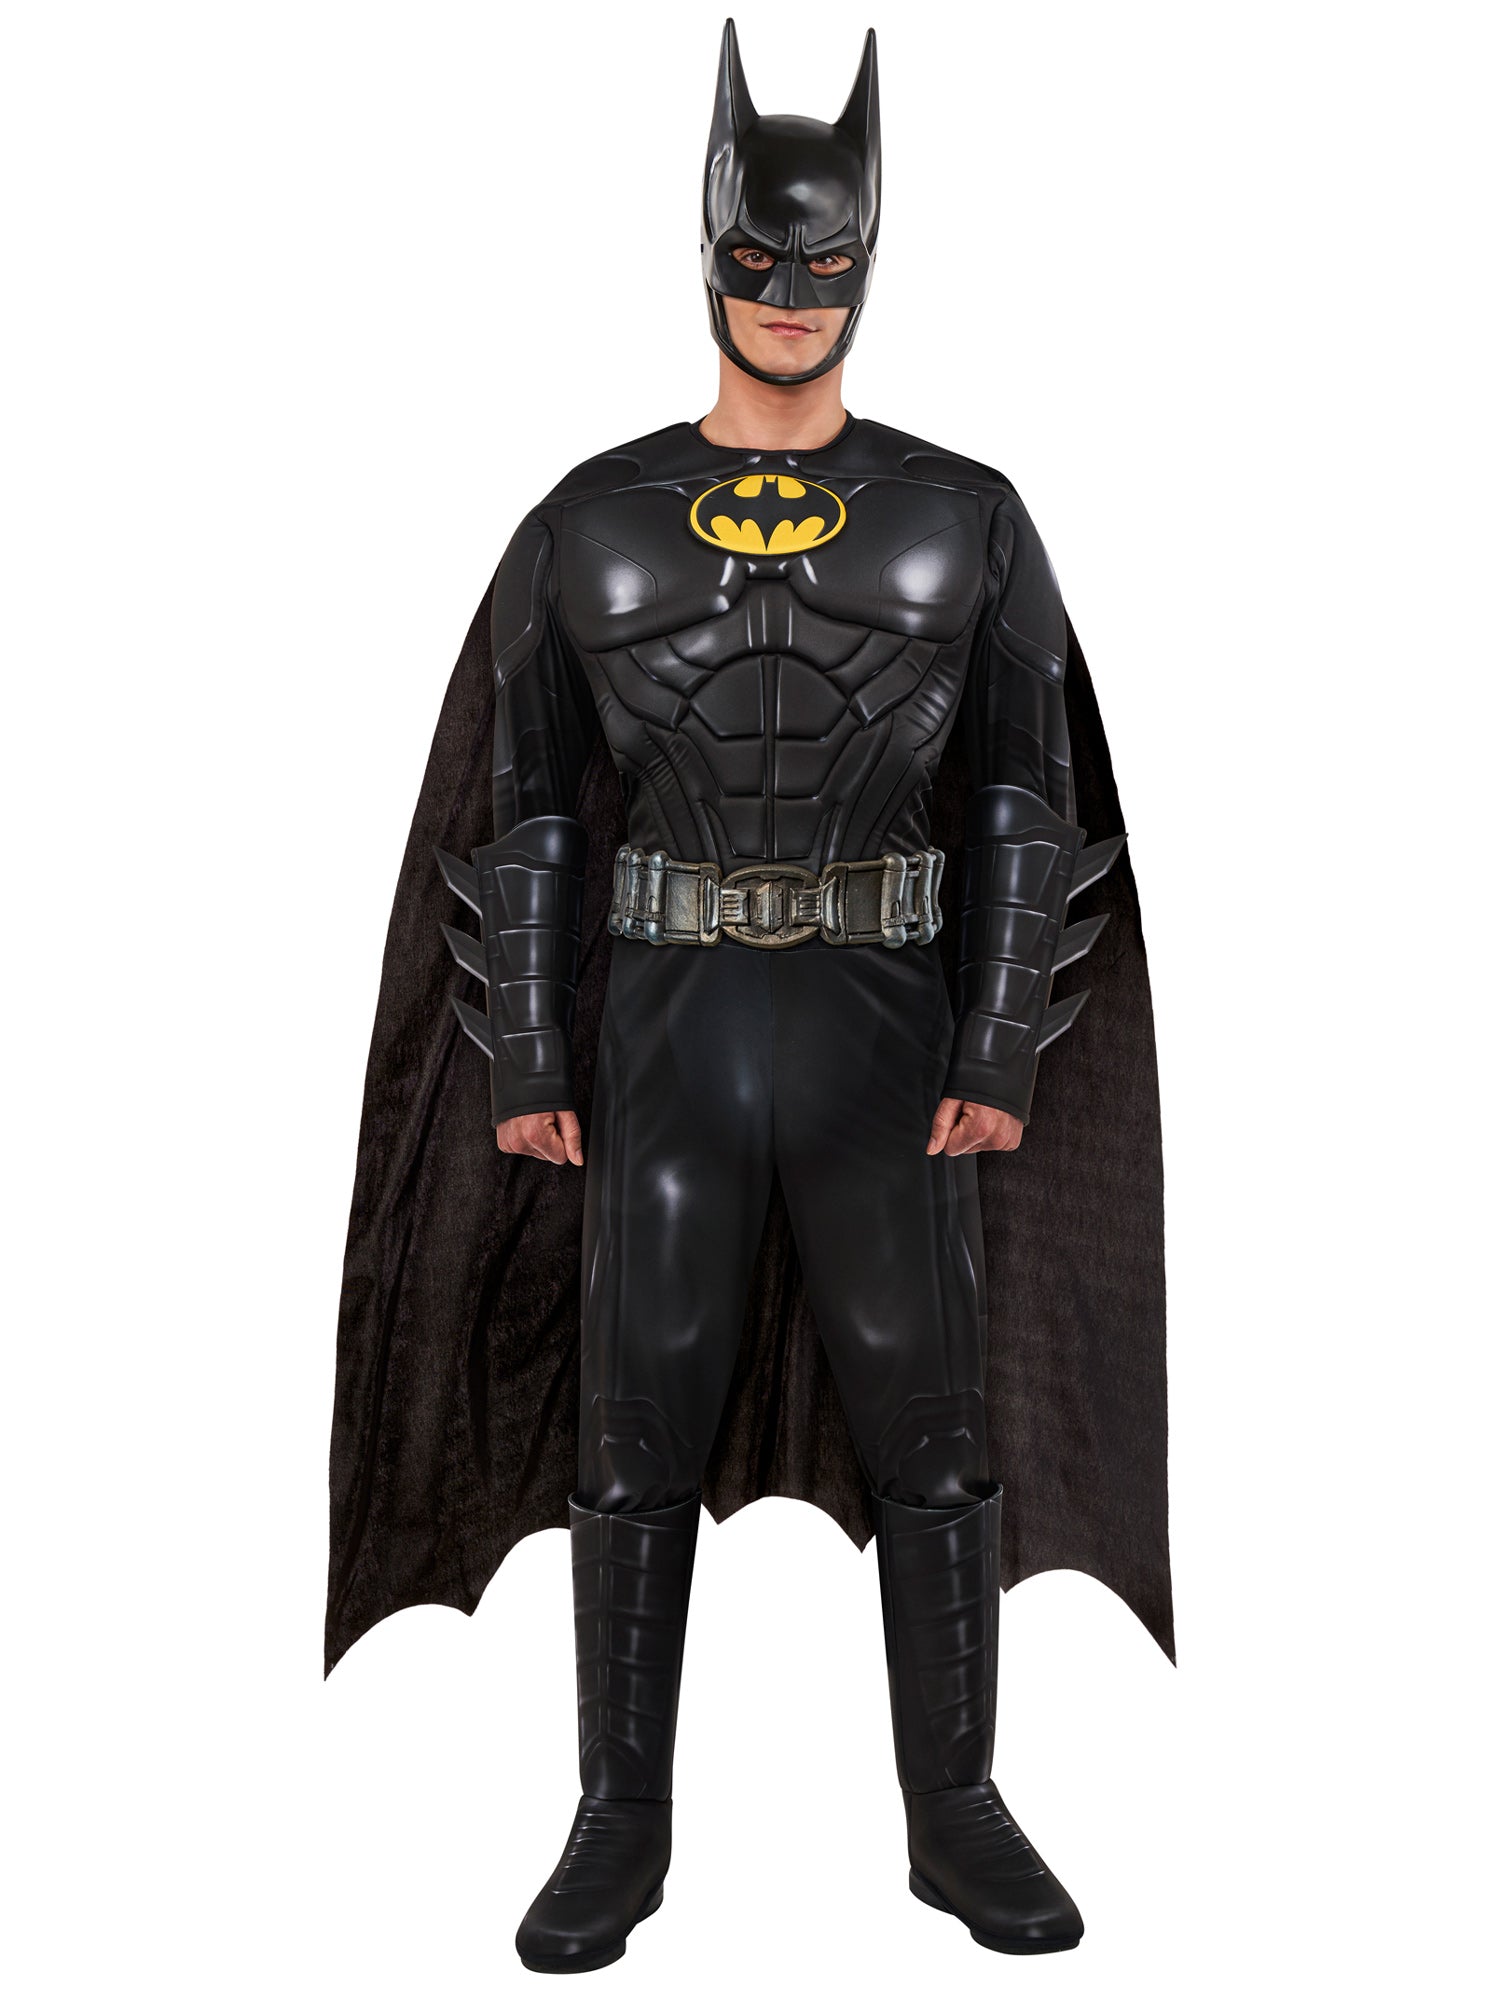 Rubies Costumes COSTUMES: ACCESSORIES Batman Utility Belt – Adults